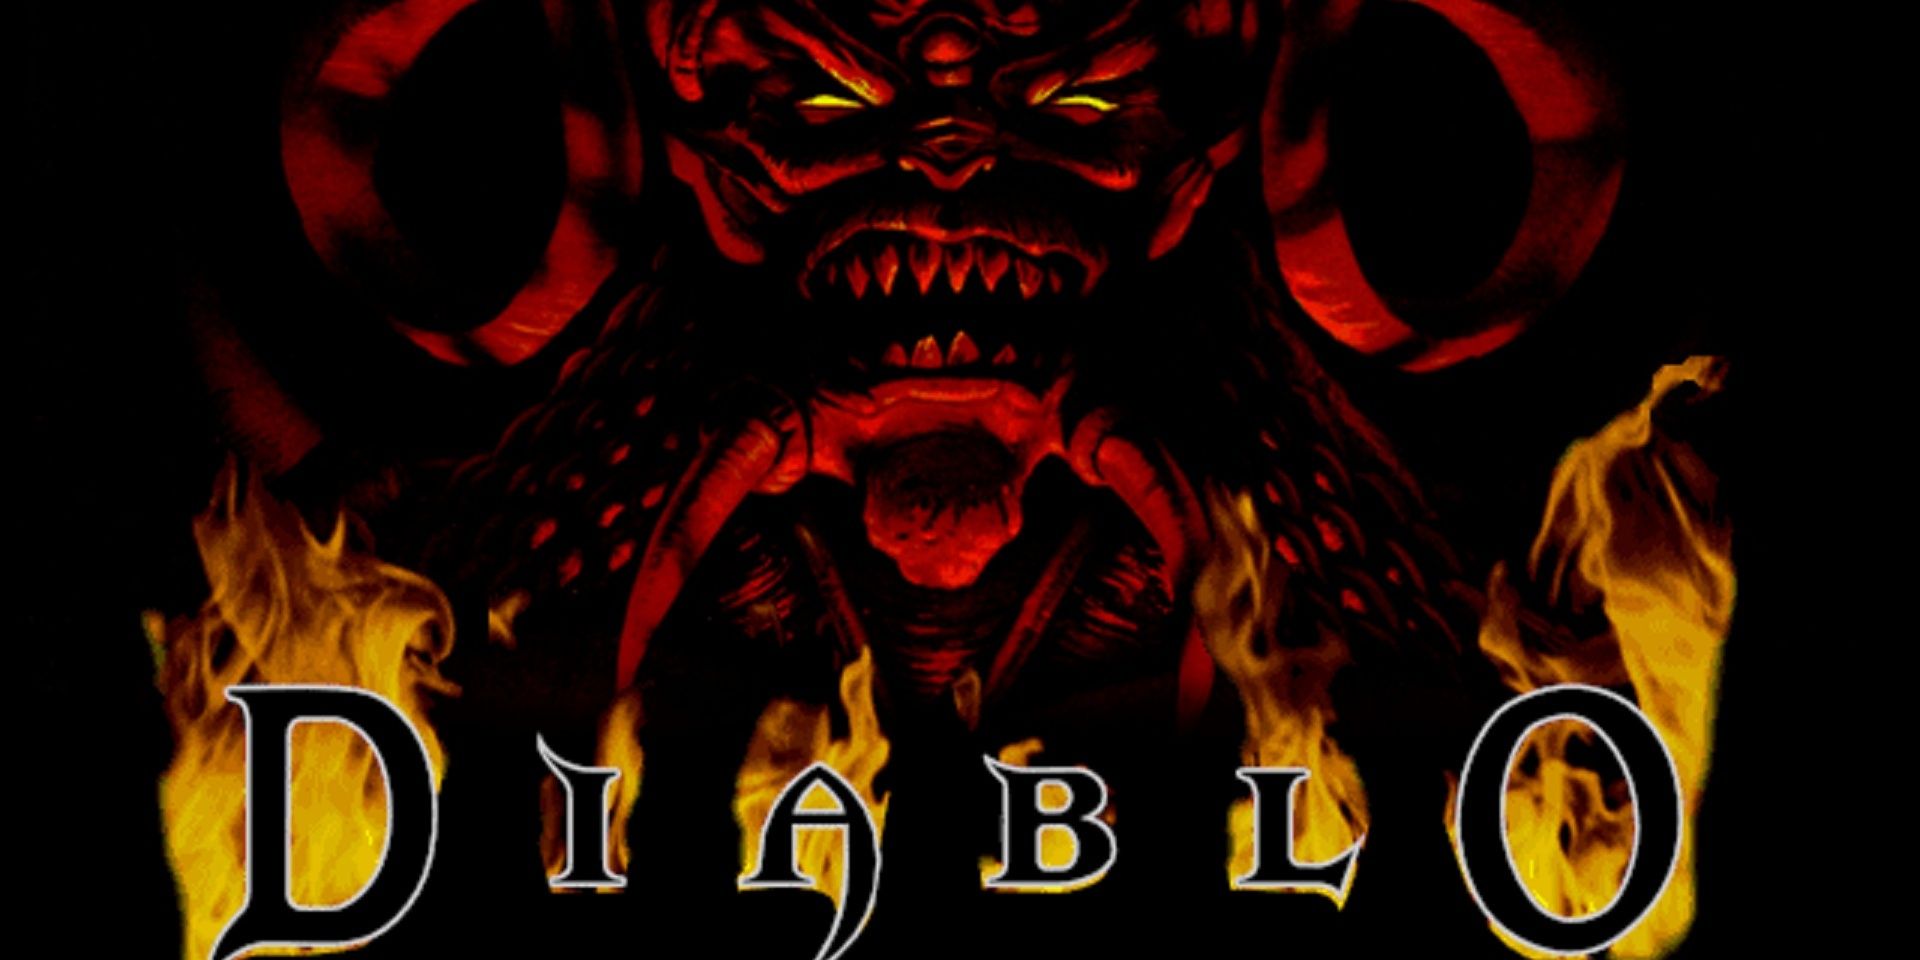 poster for the game Diablo featuring the main villain Al'Diabolos, the Lord of Terror a.k.a Diablo